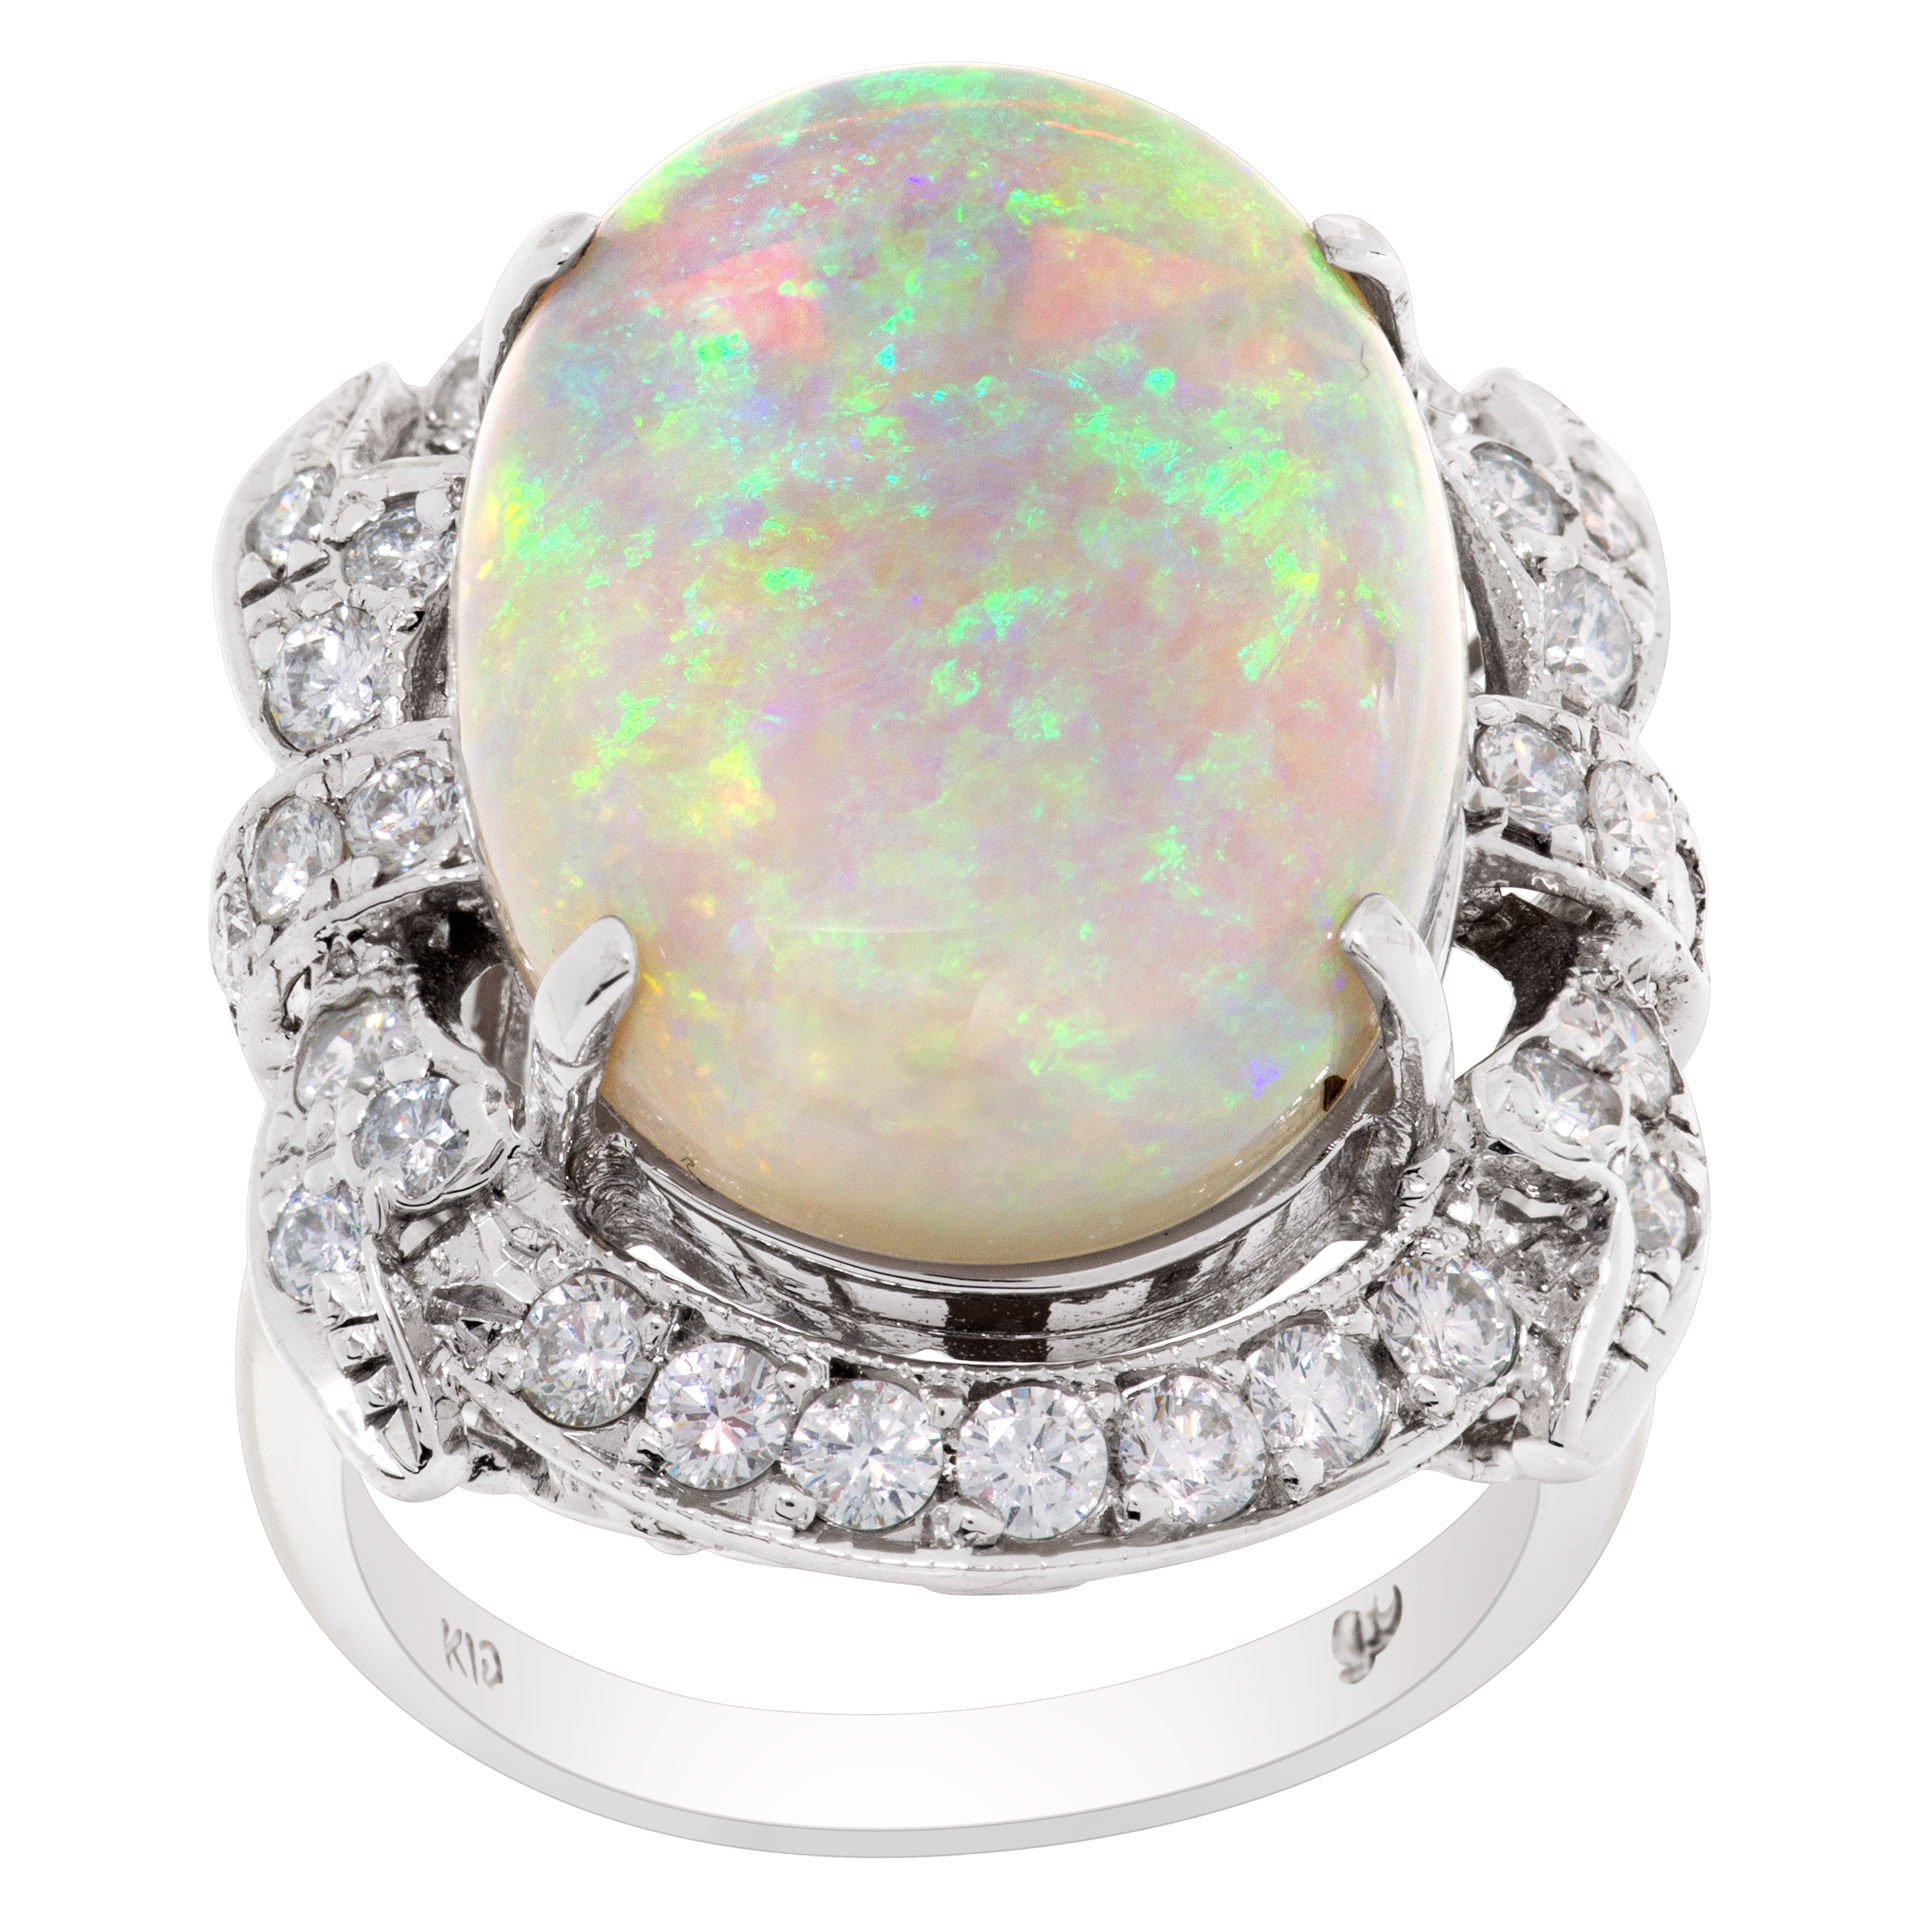 Australian opal & diamond ring in 18k white gold. 1.16 carats in diamonds. Size 7.5 image 1